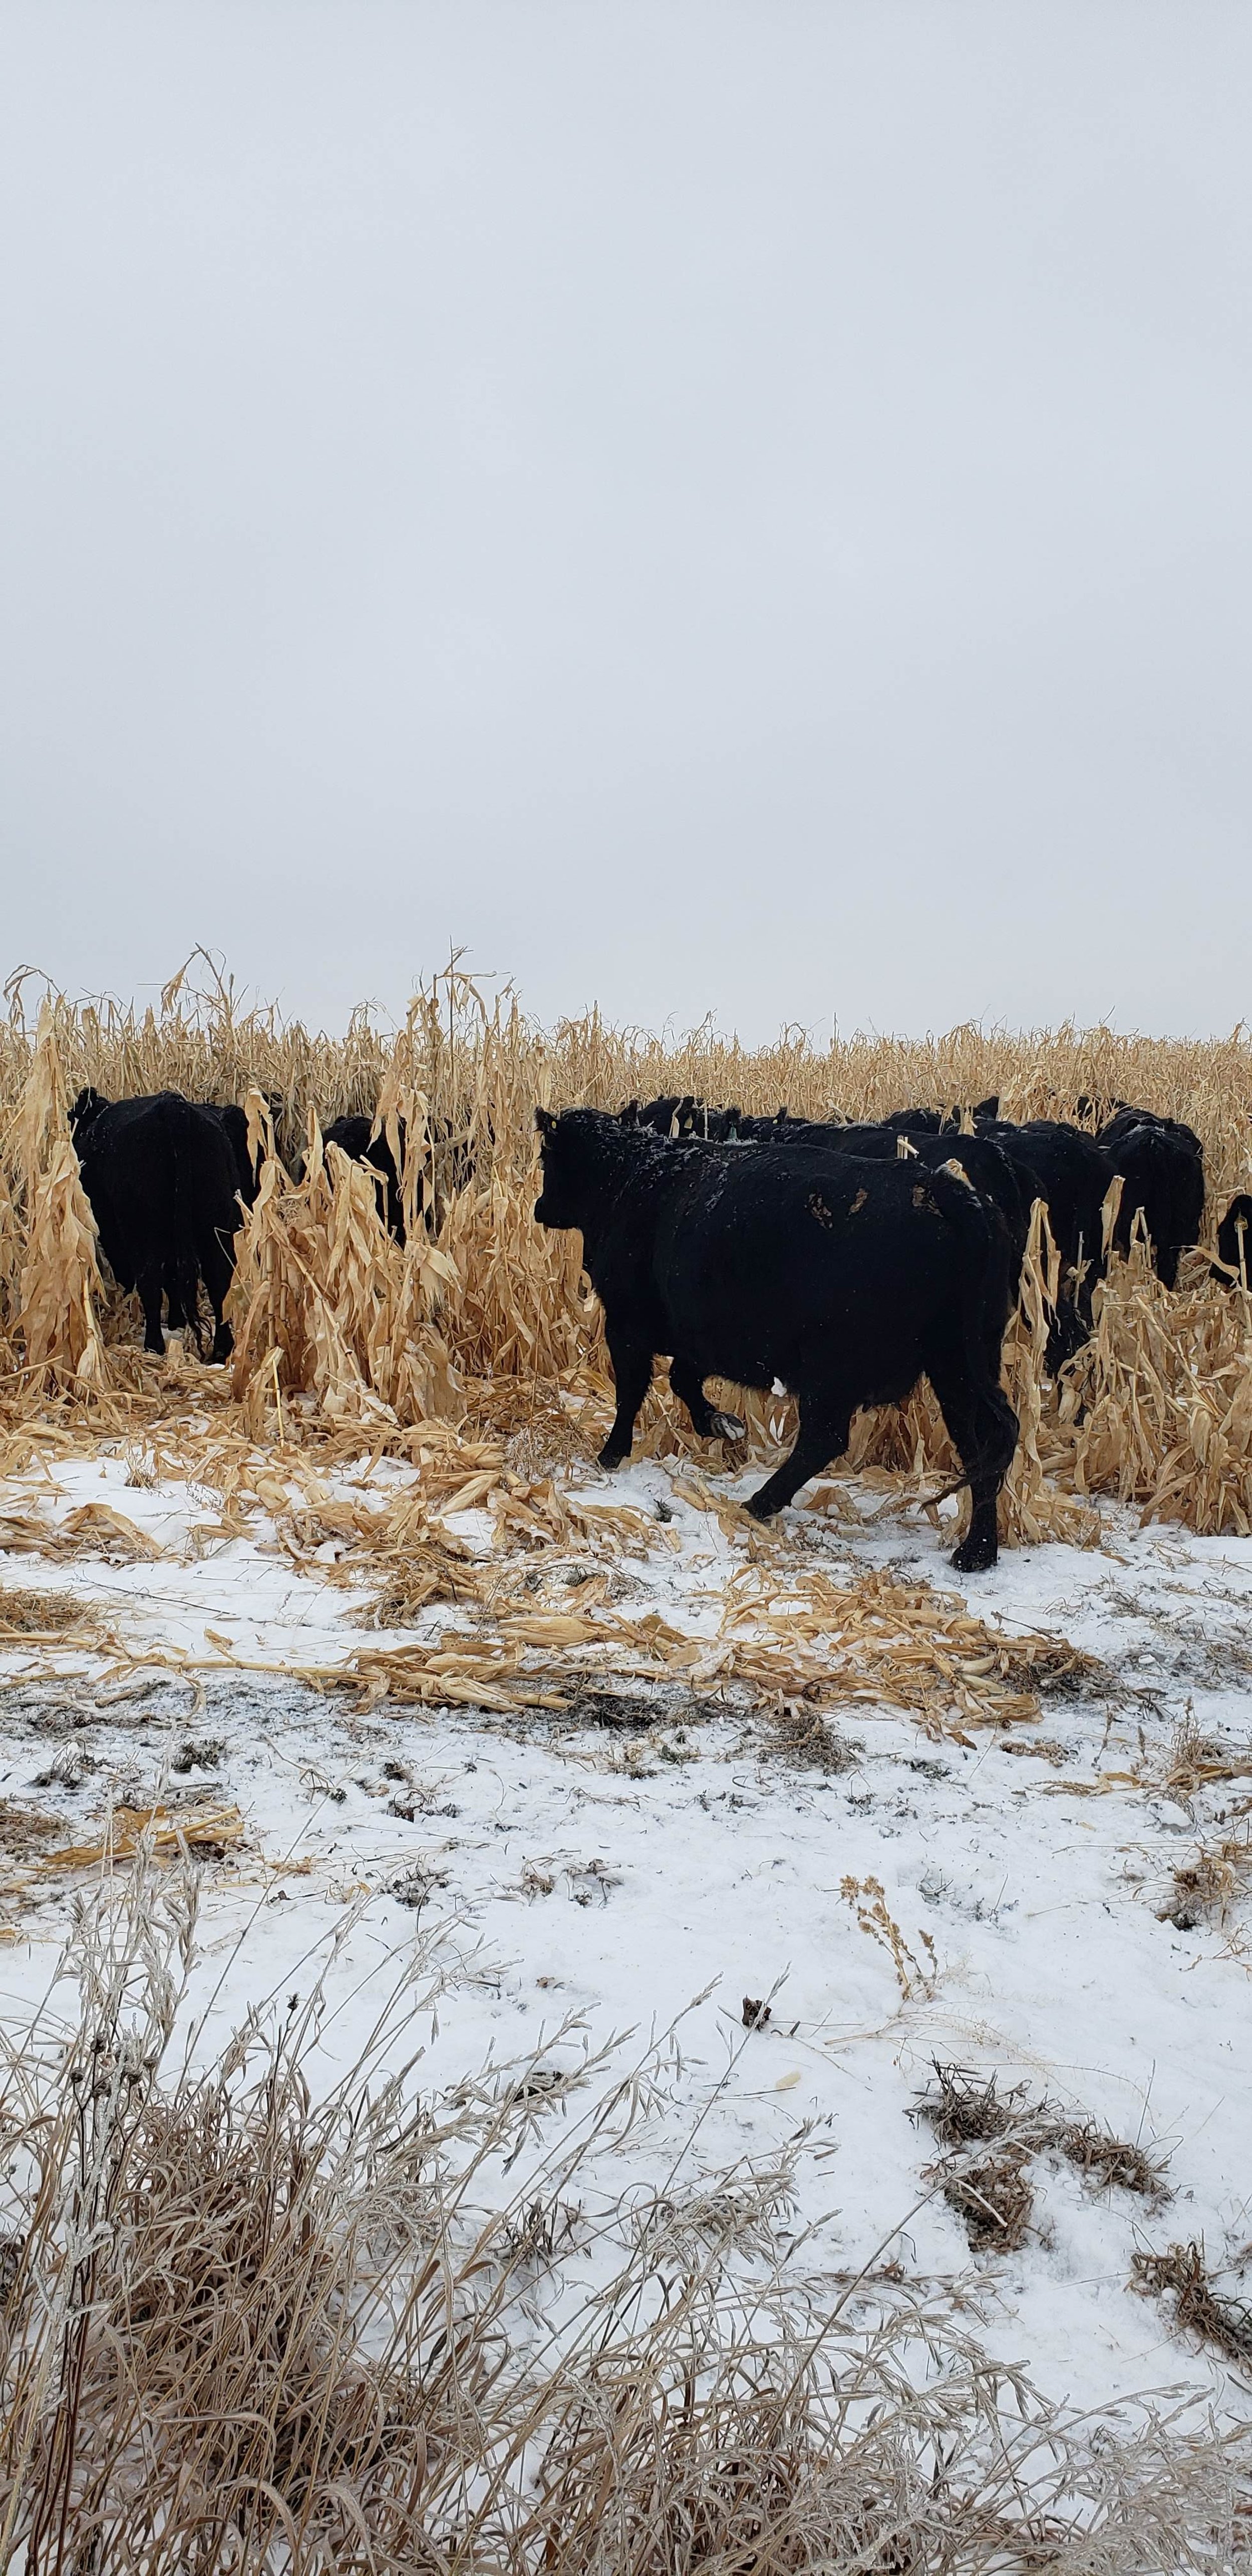 Cows on corn grazing